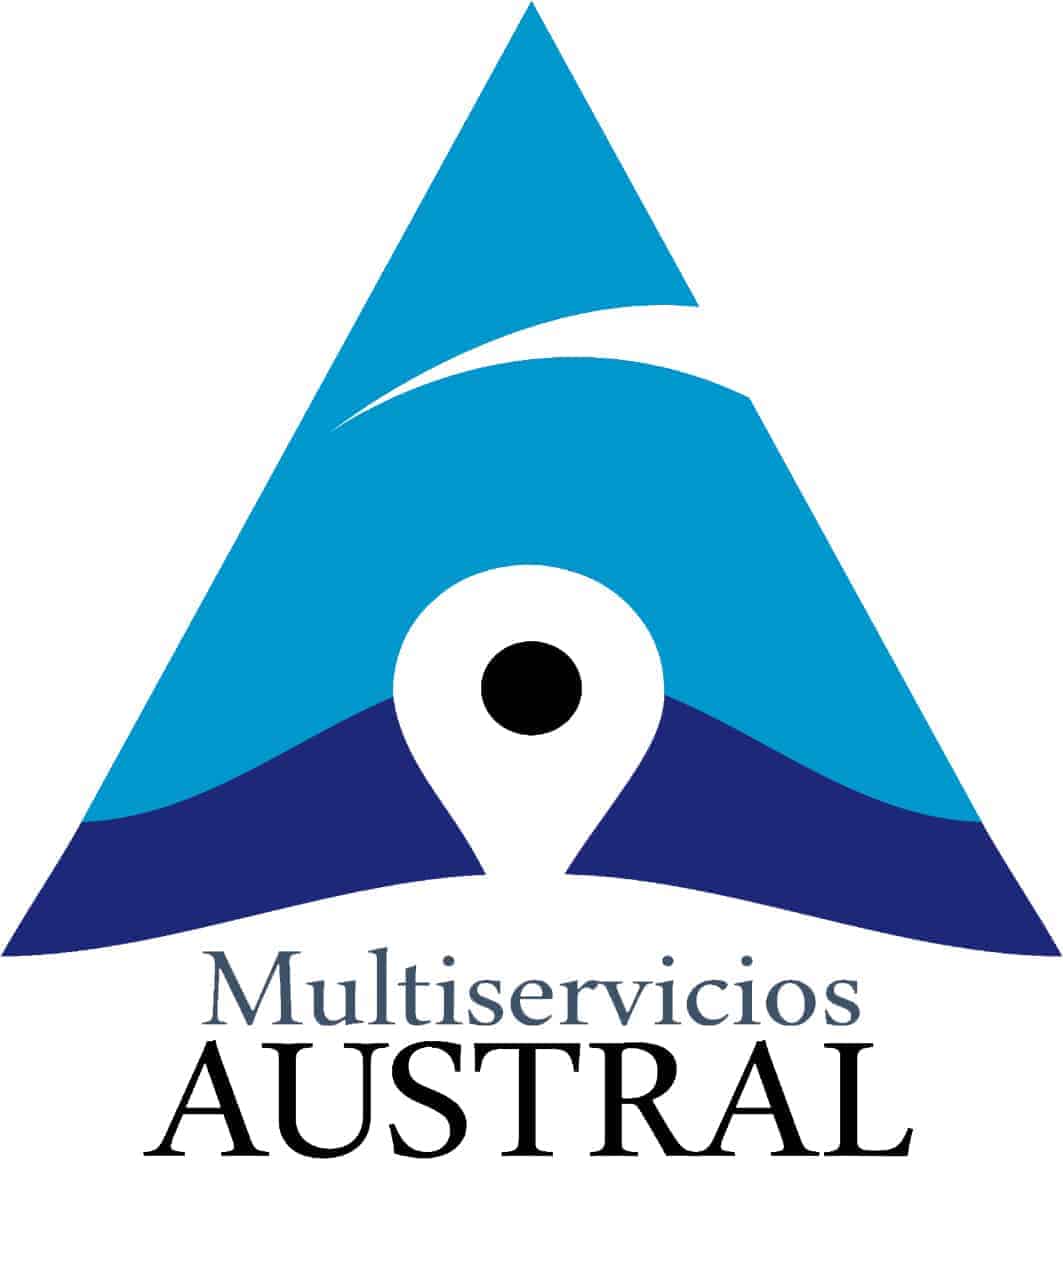 Multiservicios Austral